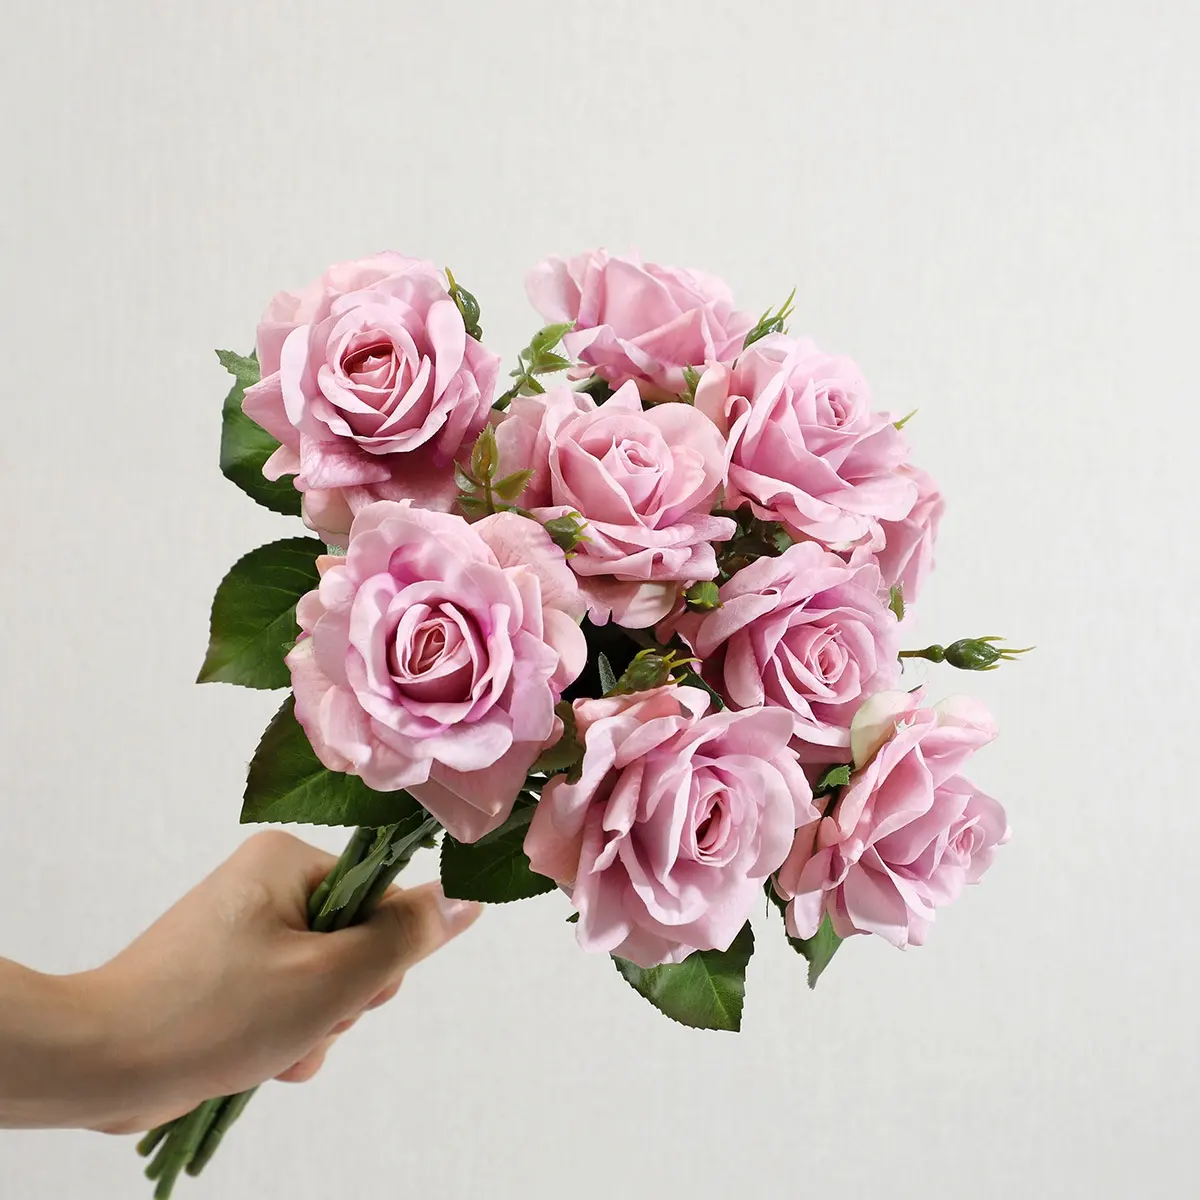 moisturizing rose simulation flower home living room decoration false flower photography props hand held flower bouquet